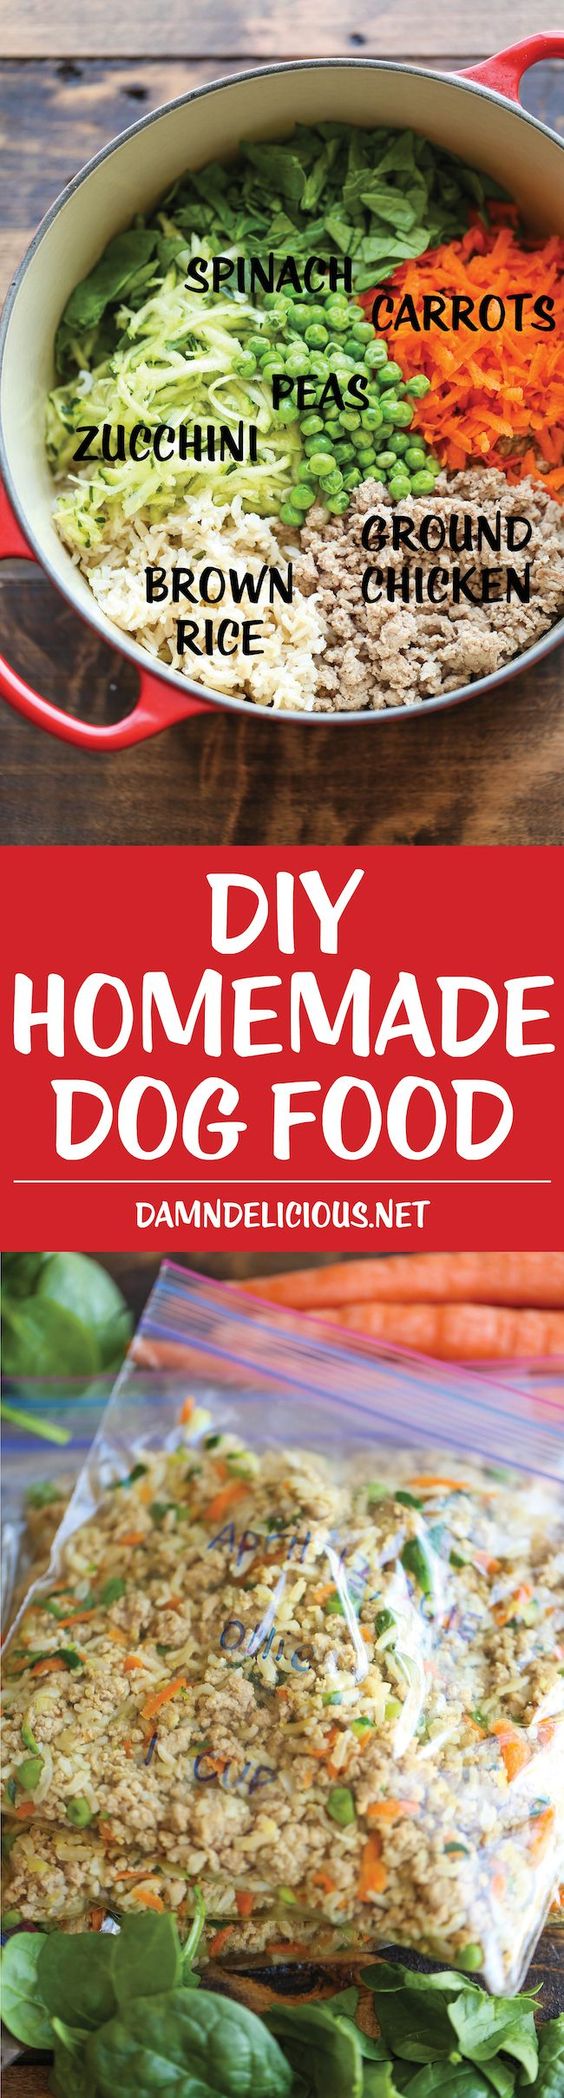 DIY Homemade Dog Food